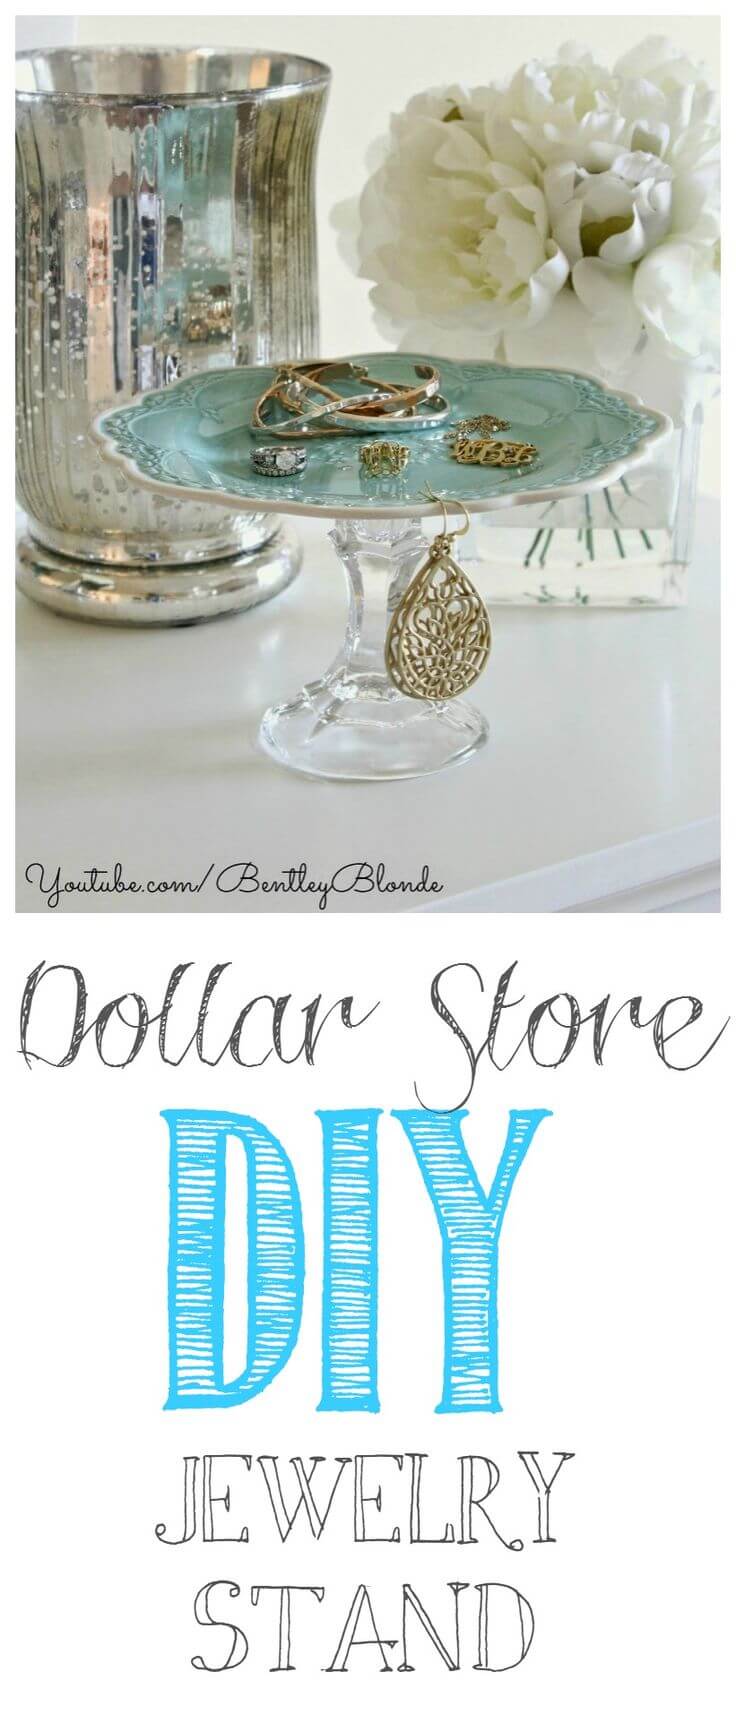 DIY Dollar Store Jewelry Stand